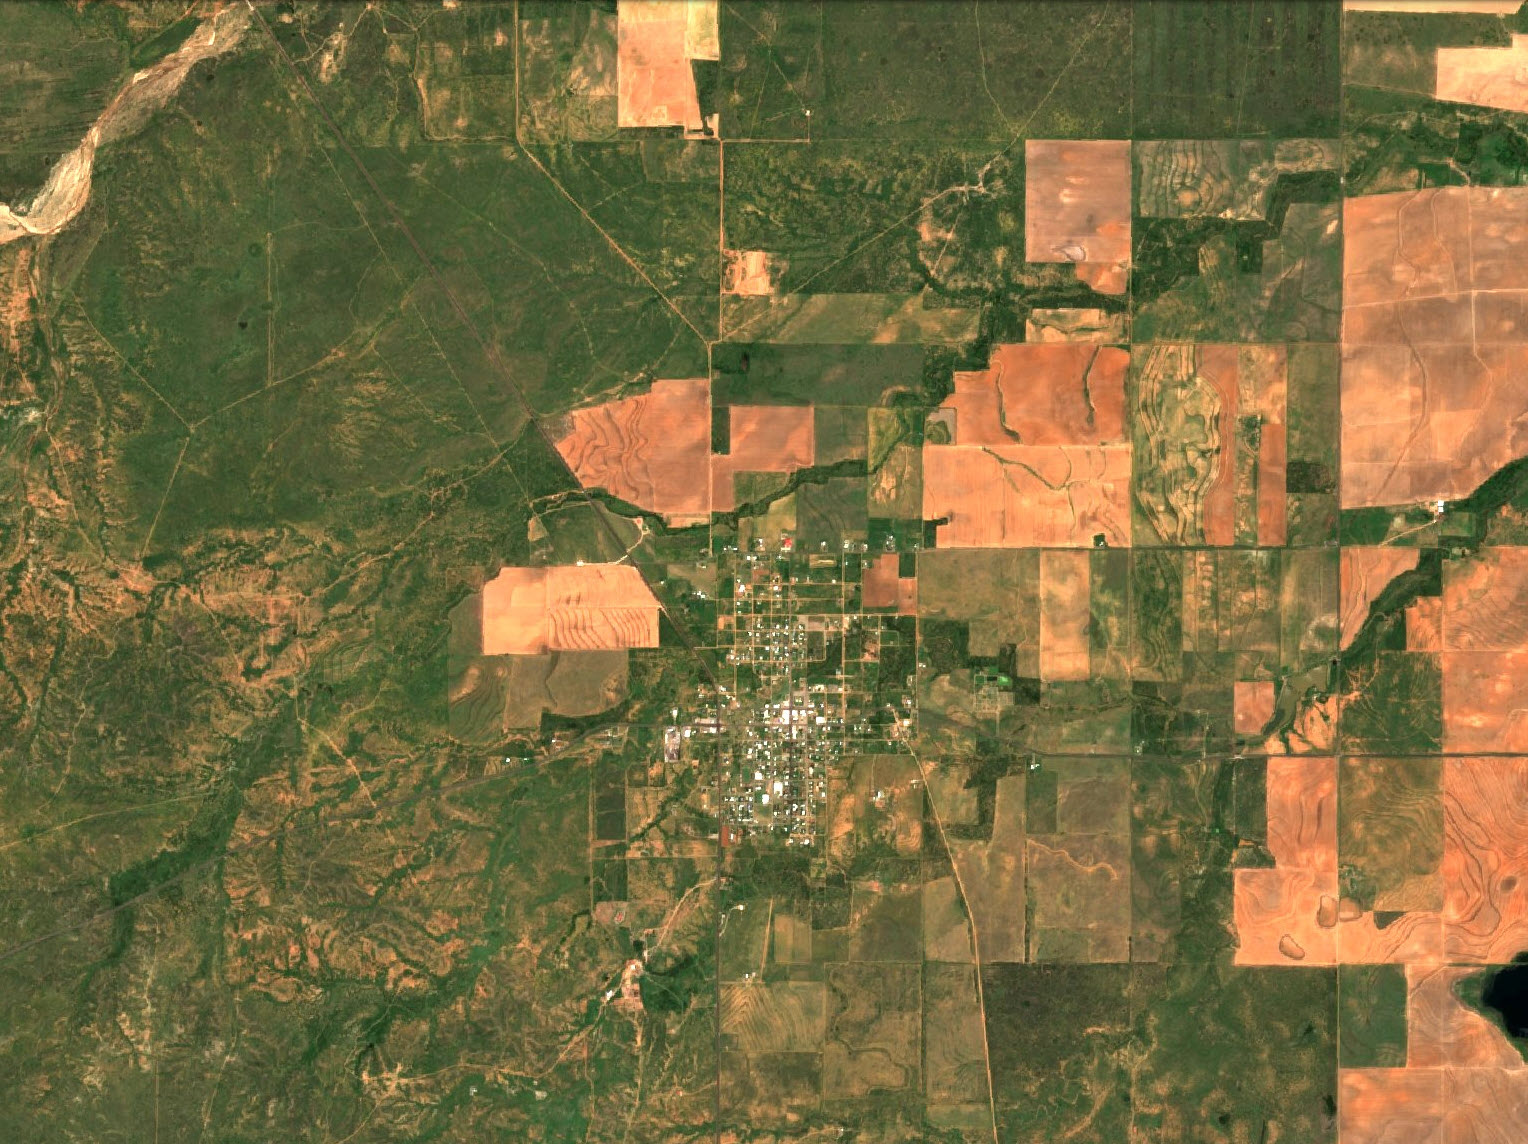 Satellite imagery of the Matador area before the tornado (https://www.sentinel-hub.com/)